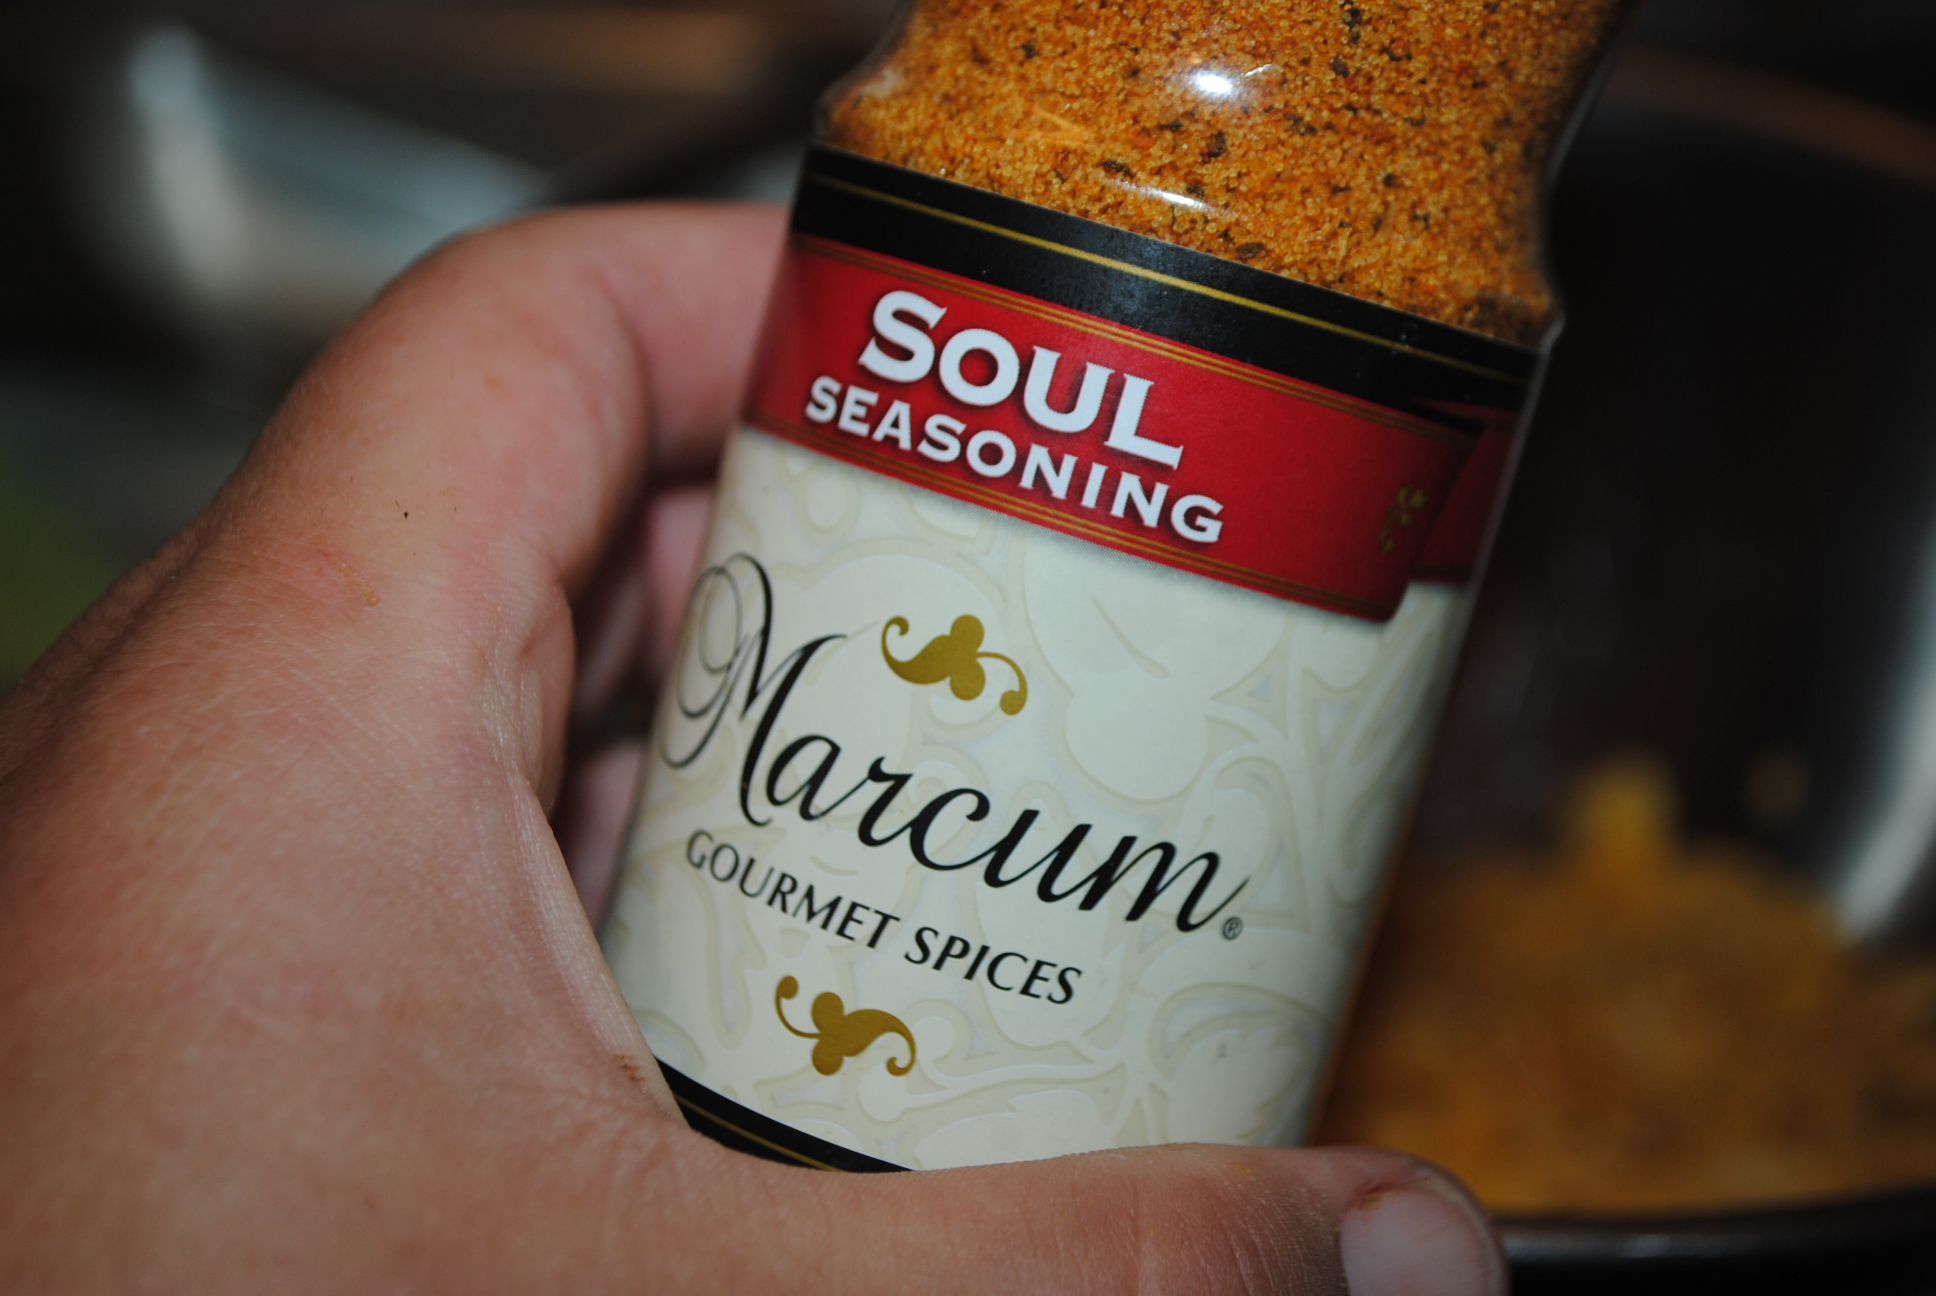 Soul Seasoning - Marcum